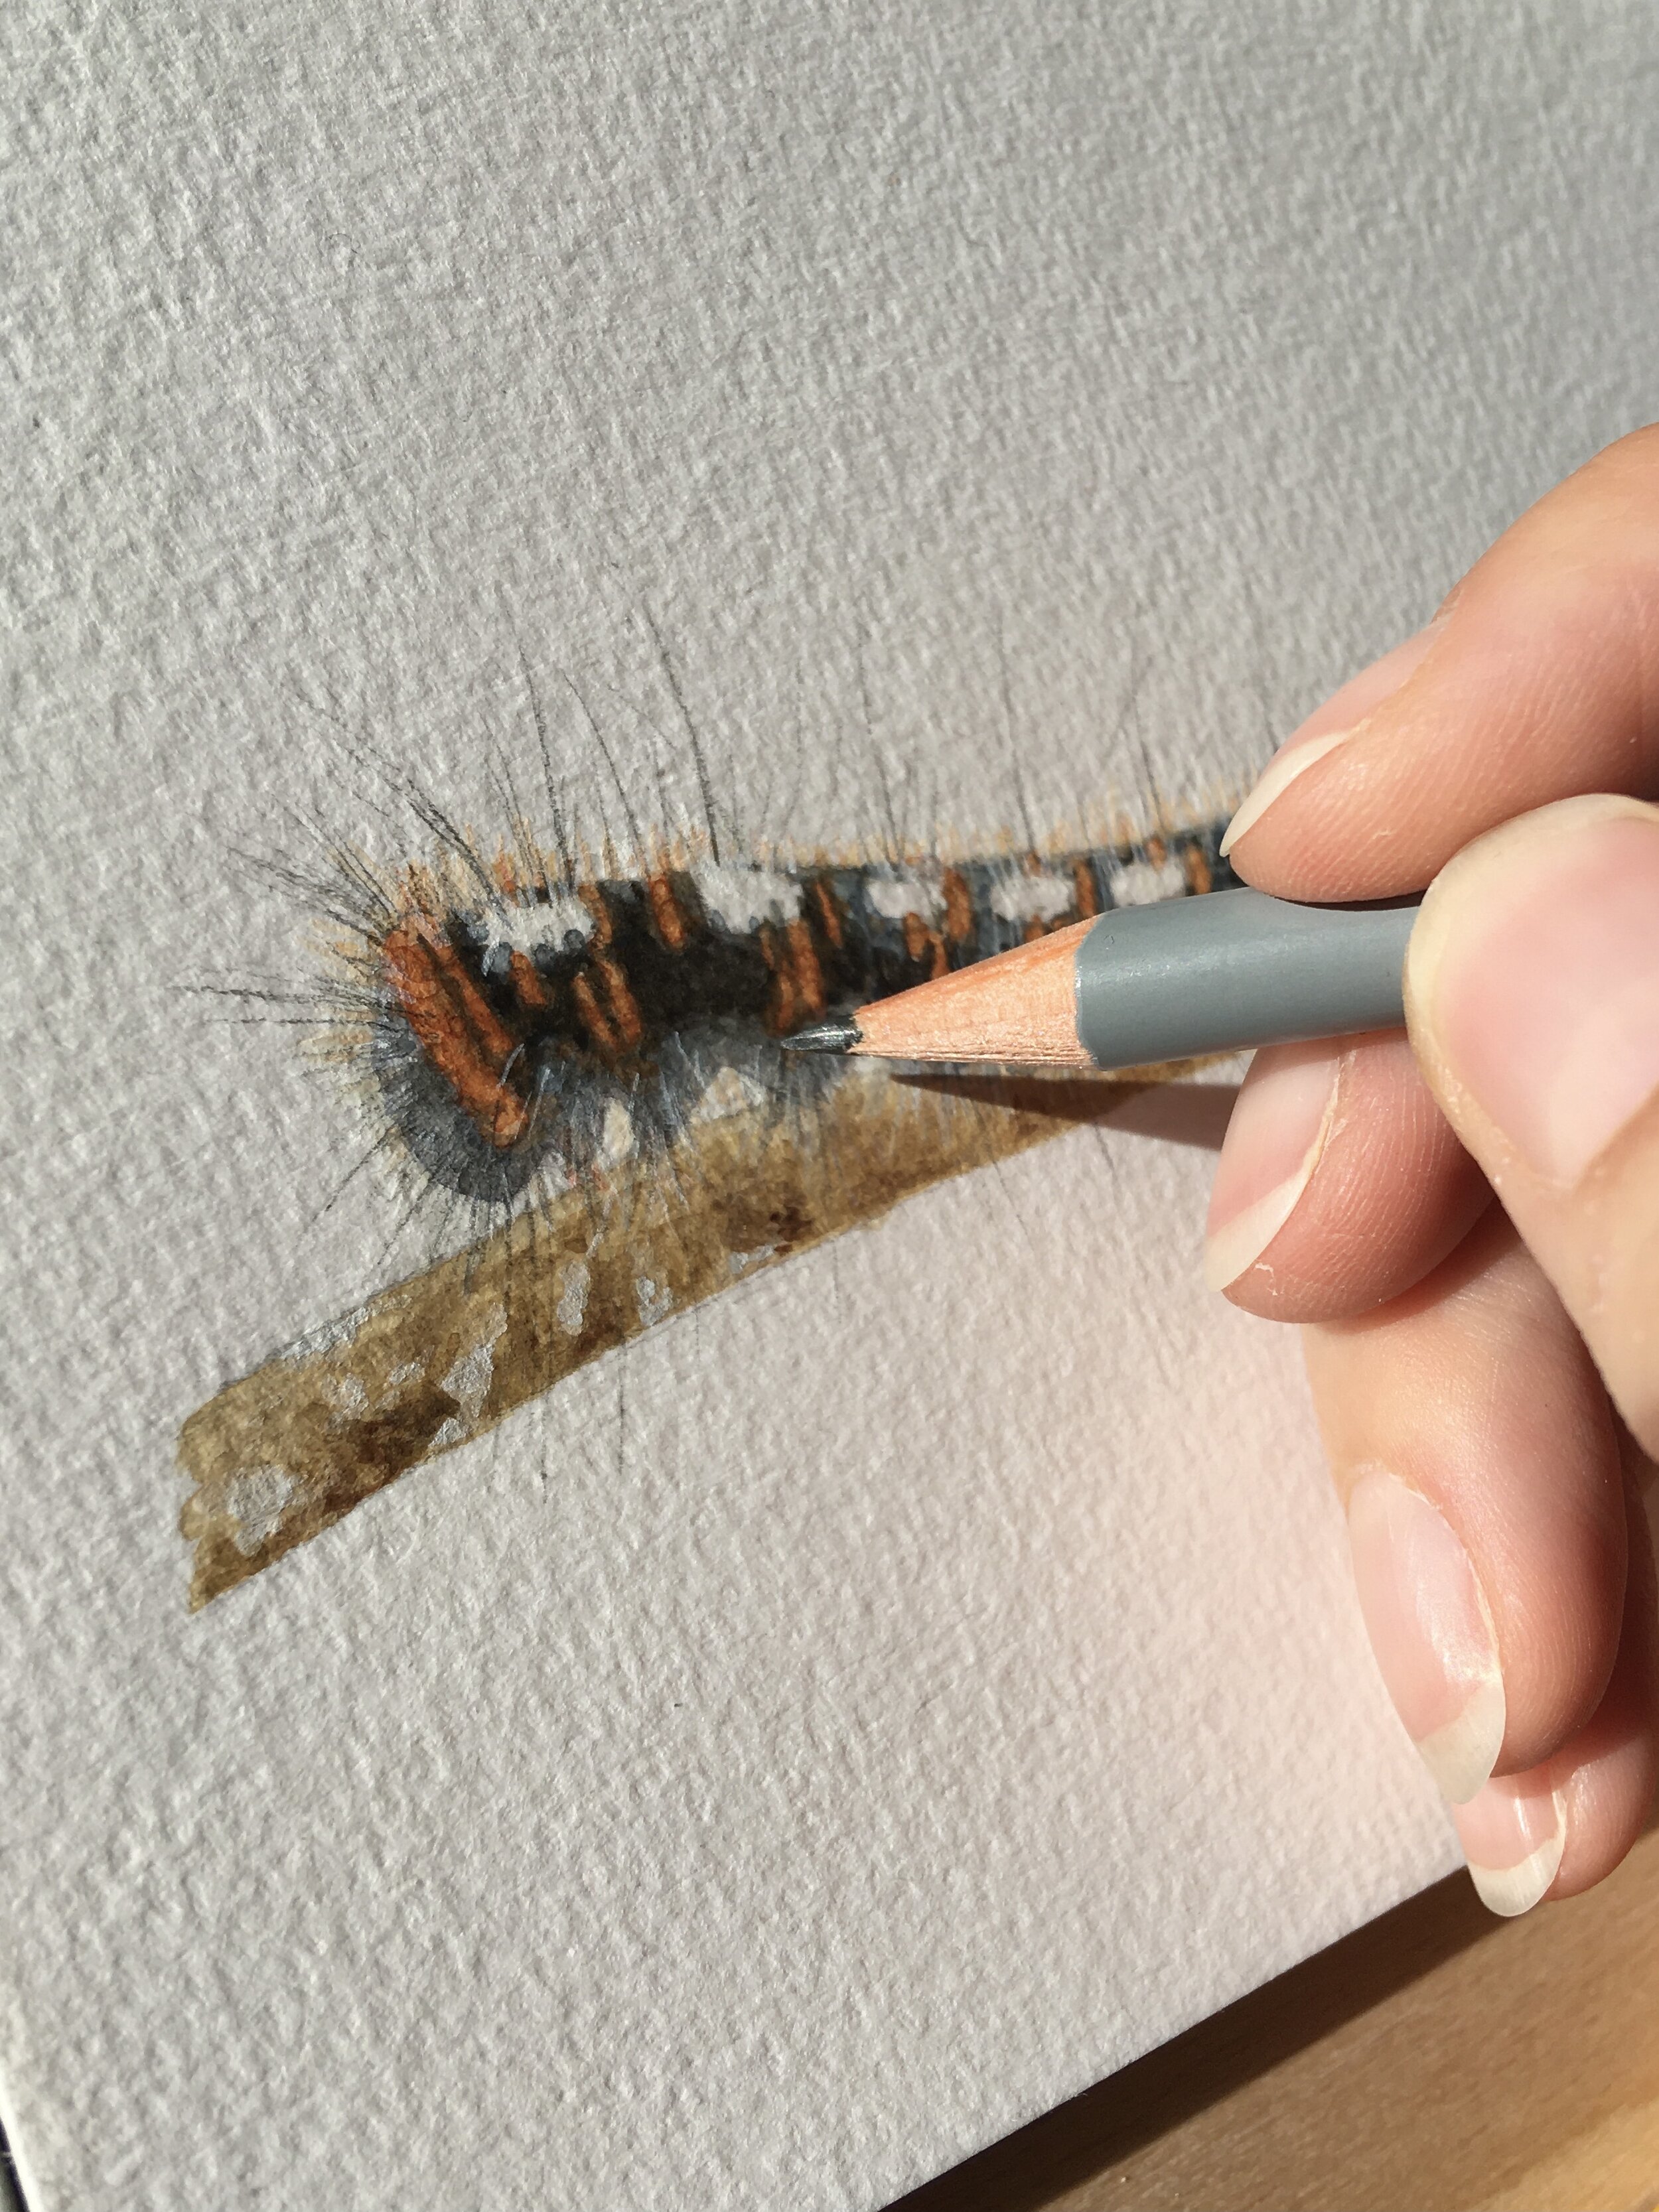 Caterpillar illustration using watercolour, gouache and graphite pencil